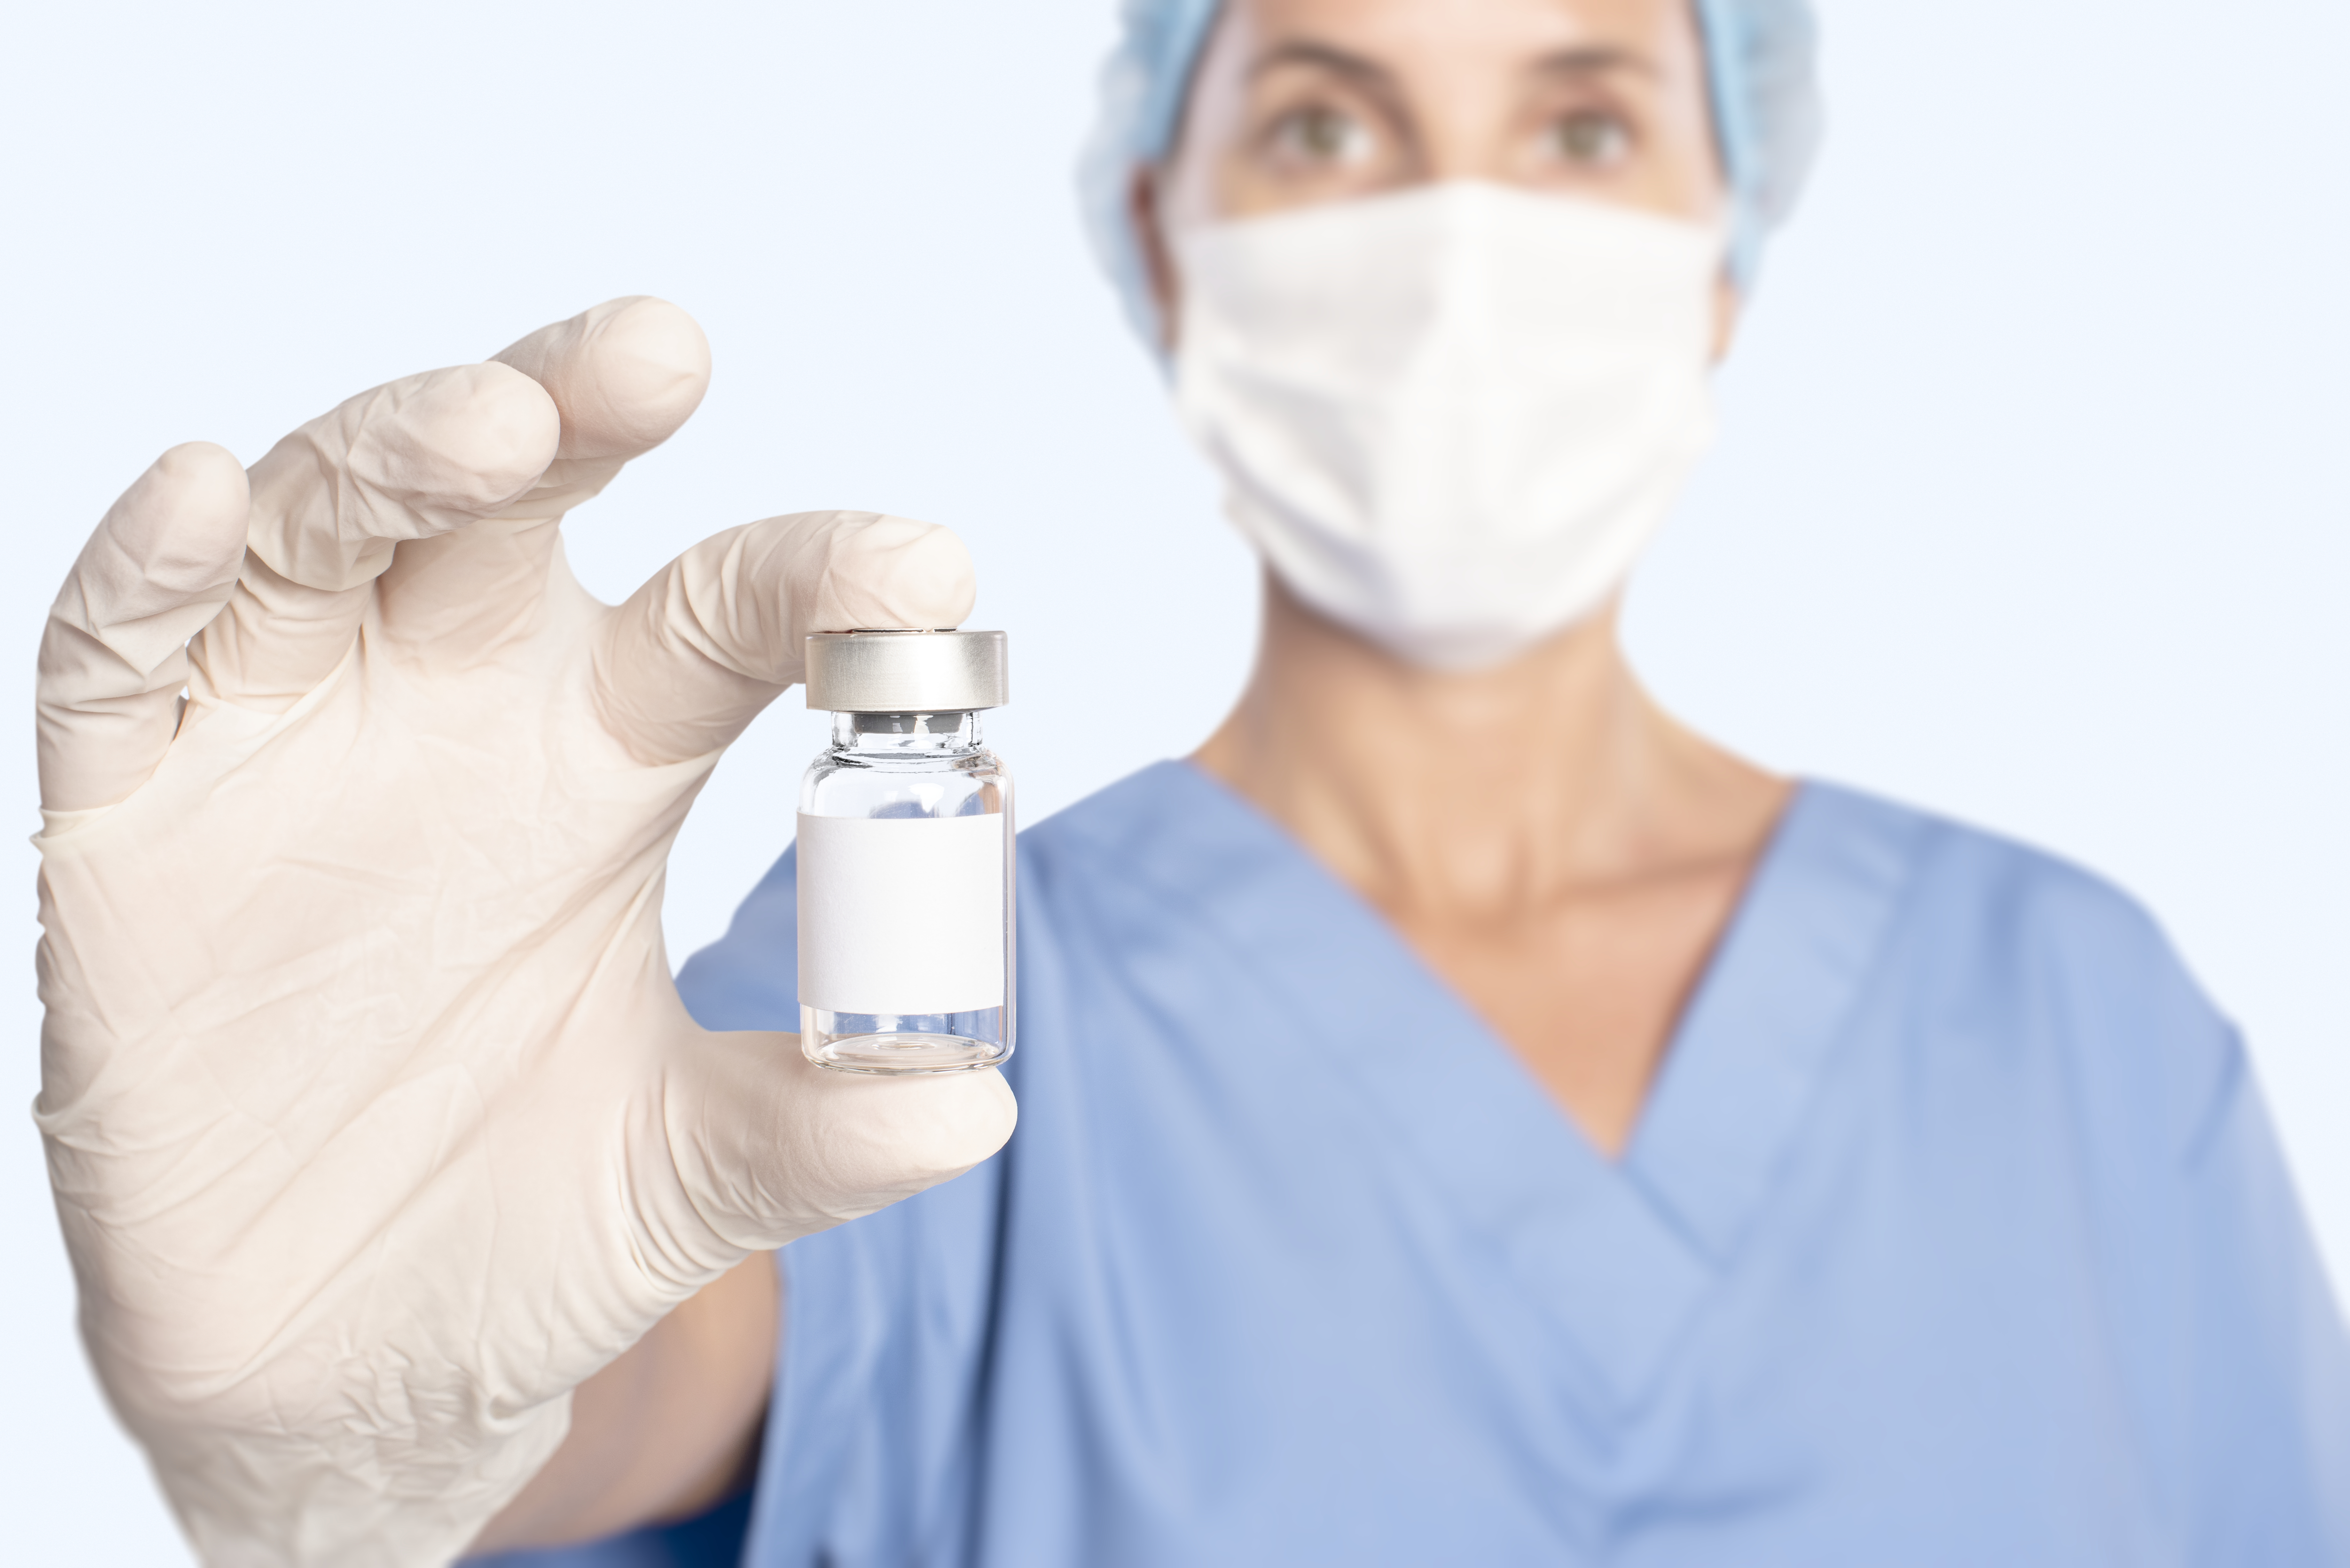 hpv vakcina medscape hpv magas kockázatú pozitív eszközök